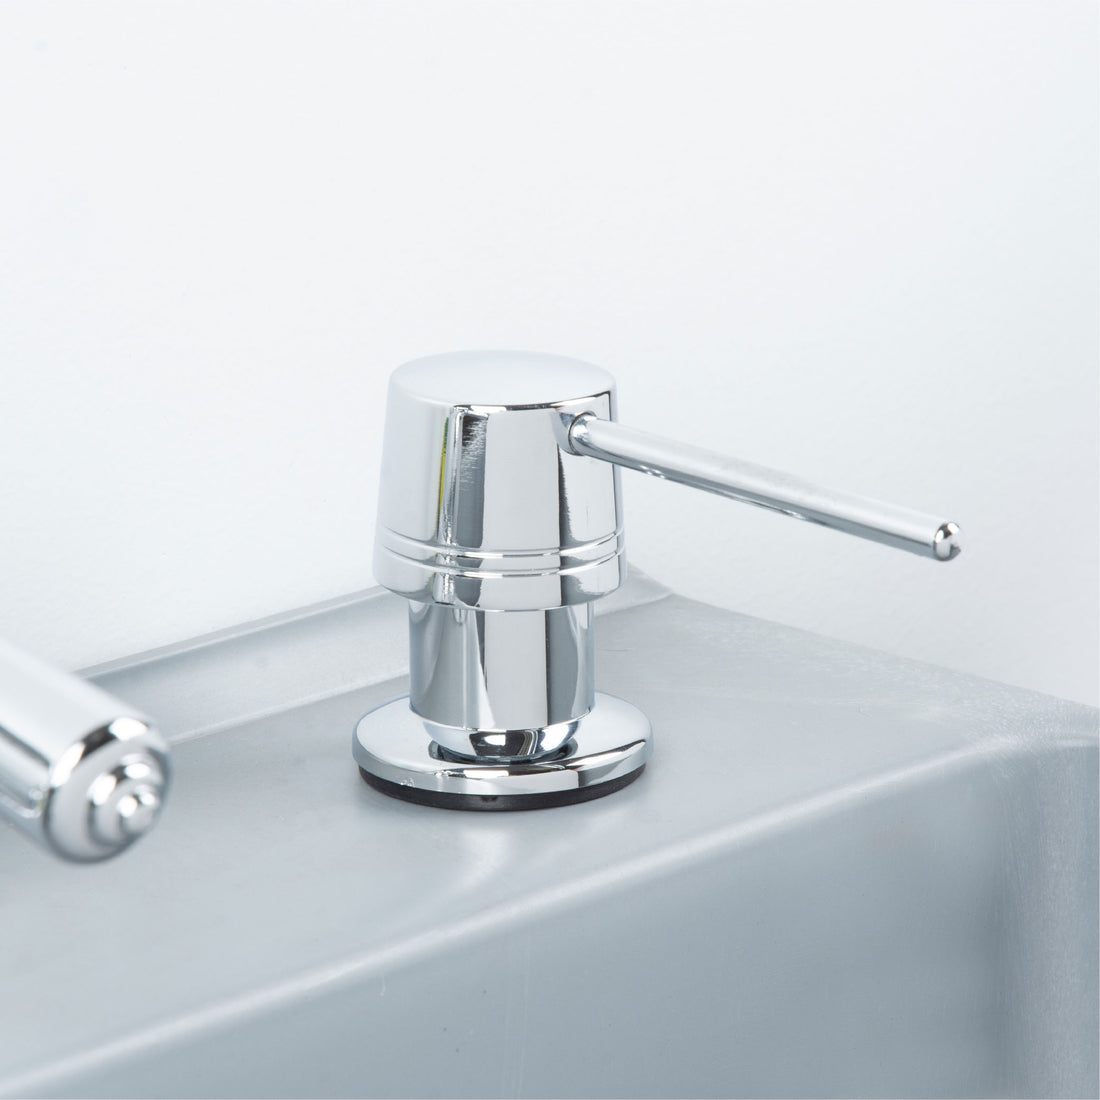 Laundry Tub Soap Dispenser (Chrome Finish) - Utility sinks vanites Tehila